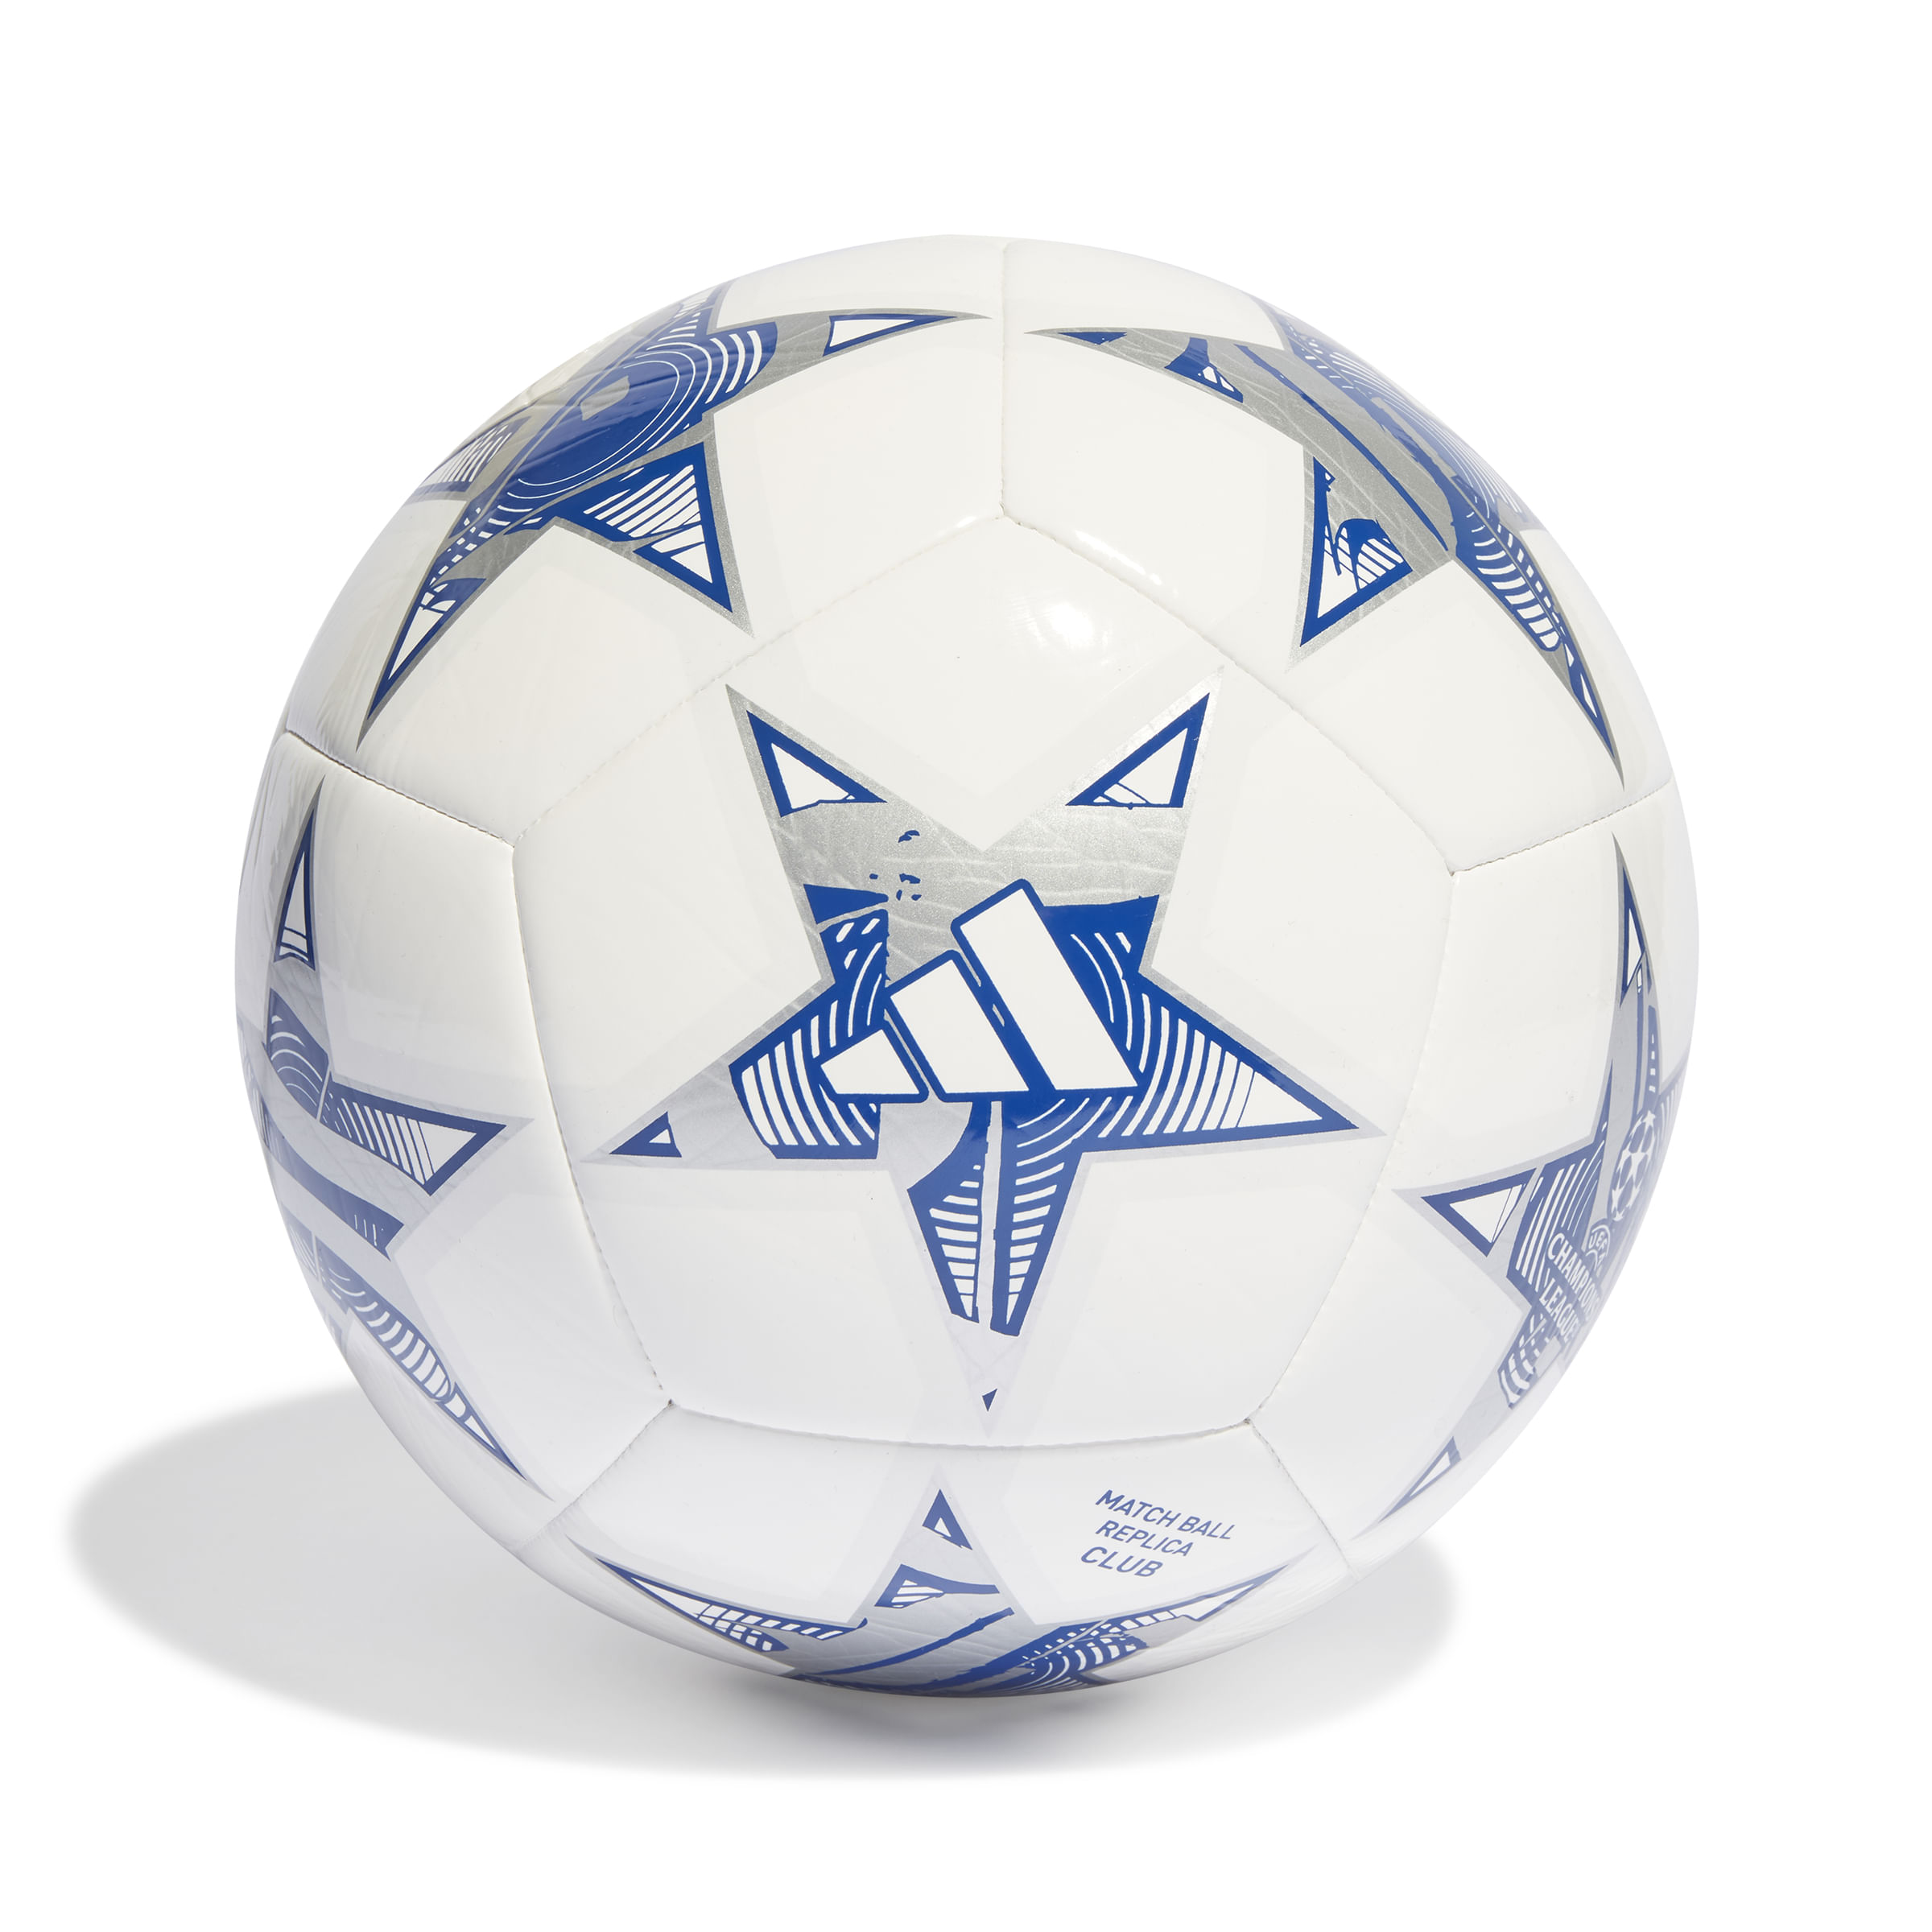 Accesorios Deporte Futbol Balon Adidas Ucl trn champions plata ia0955